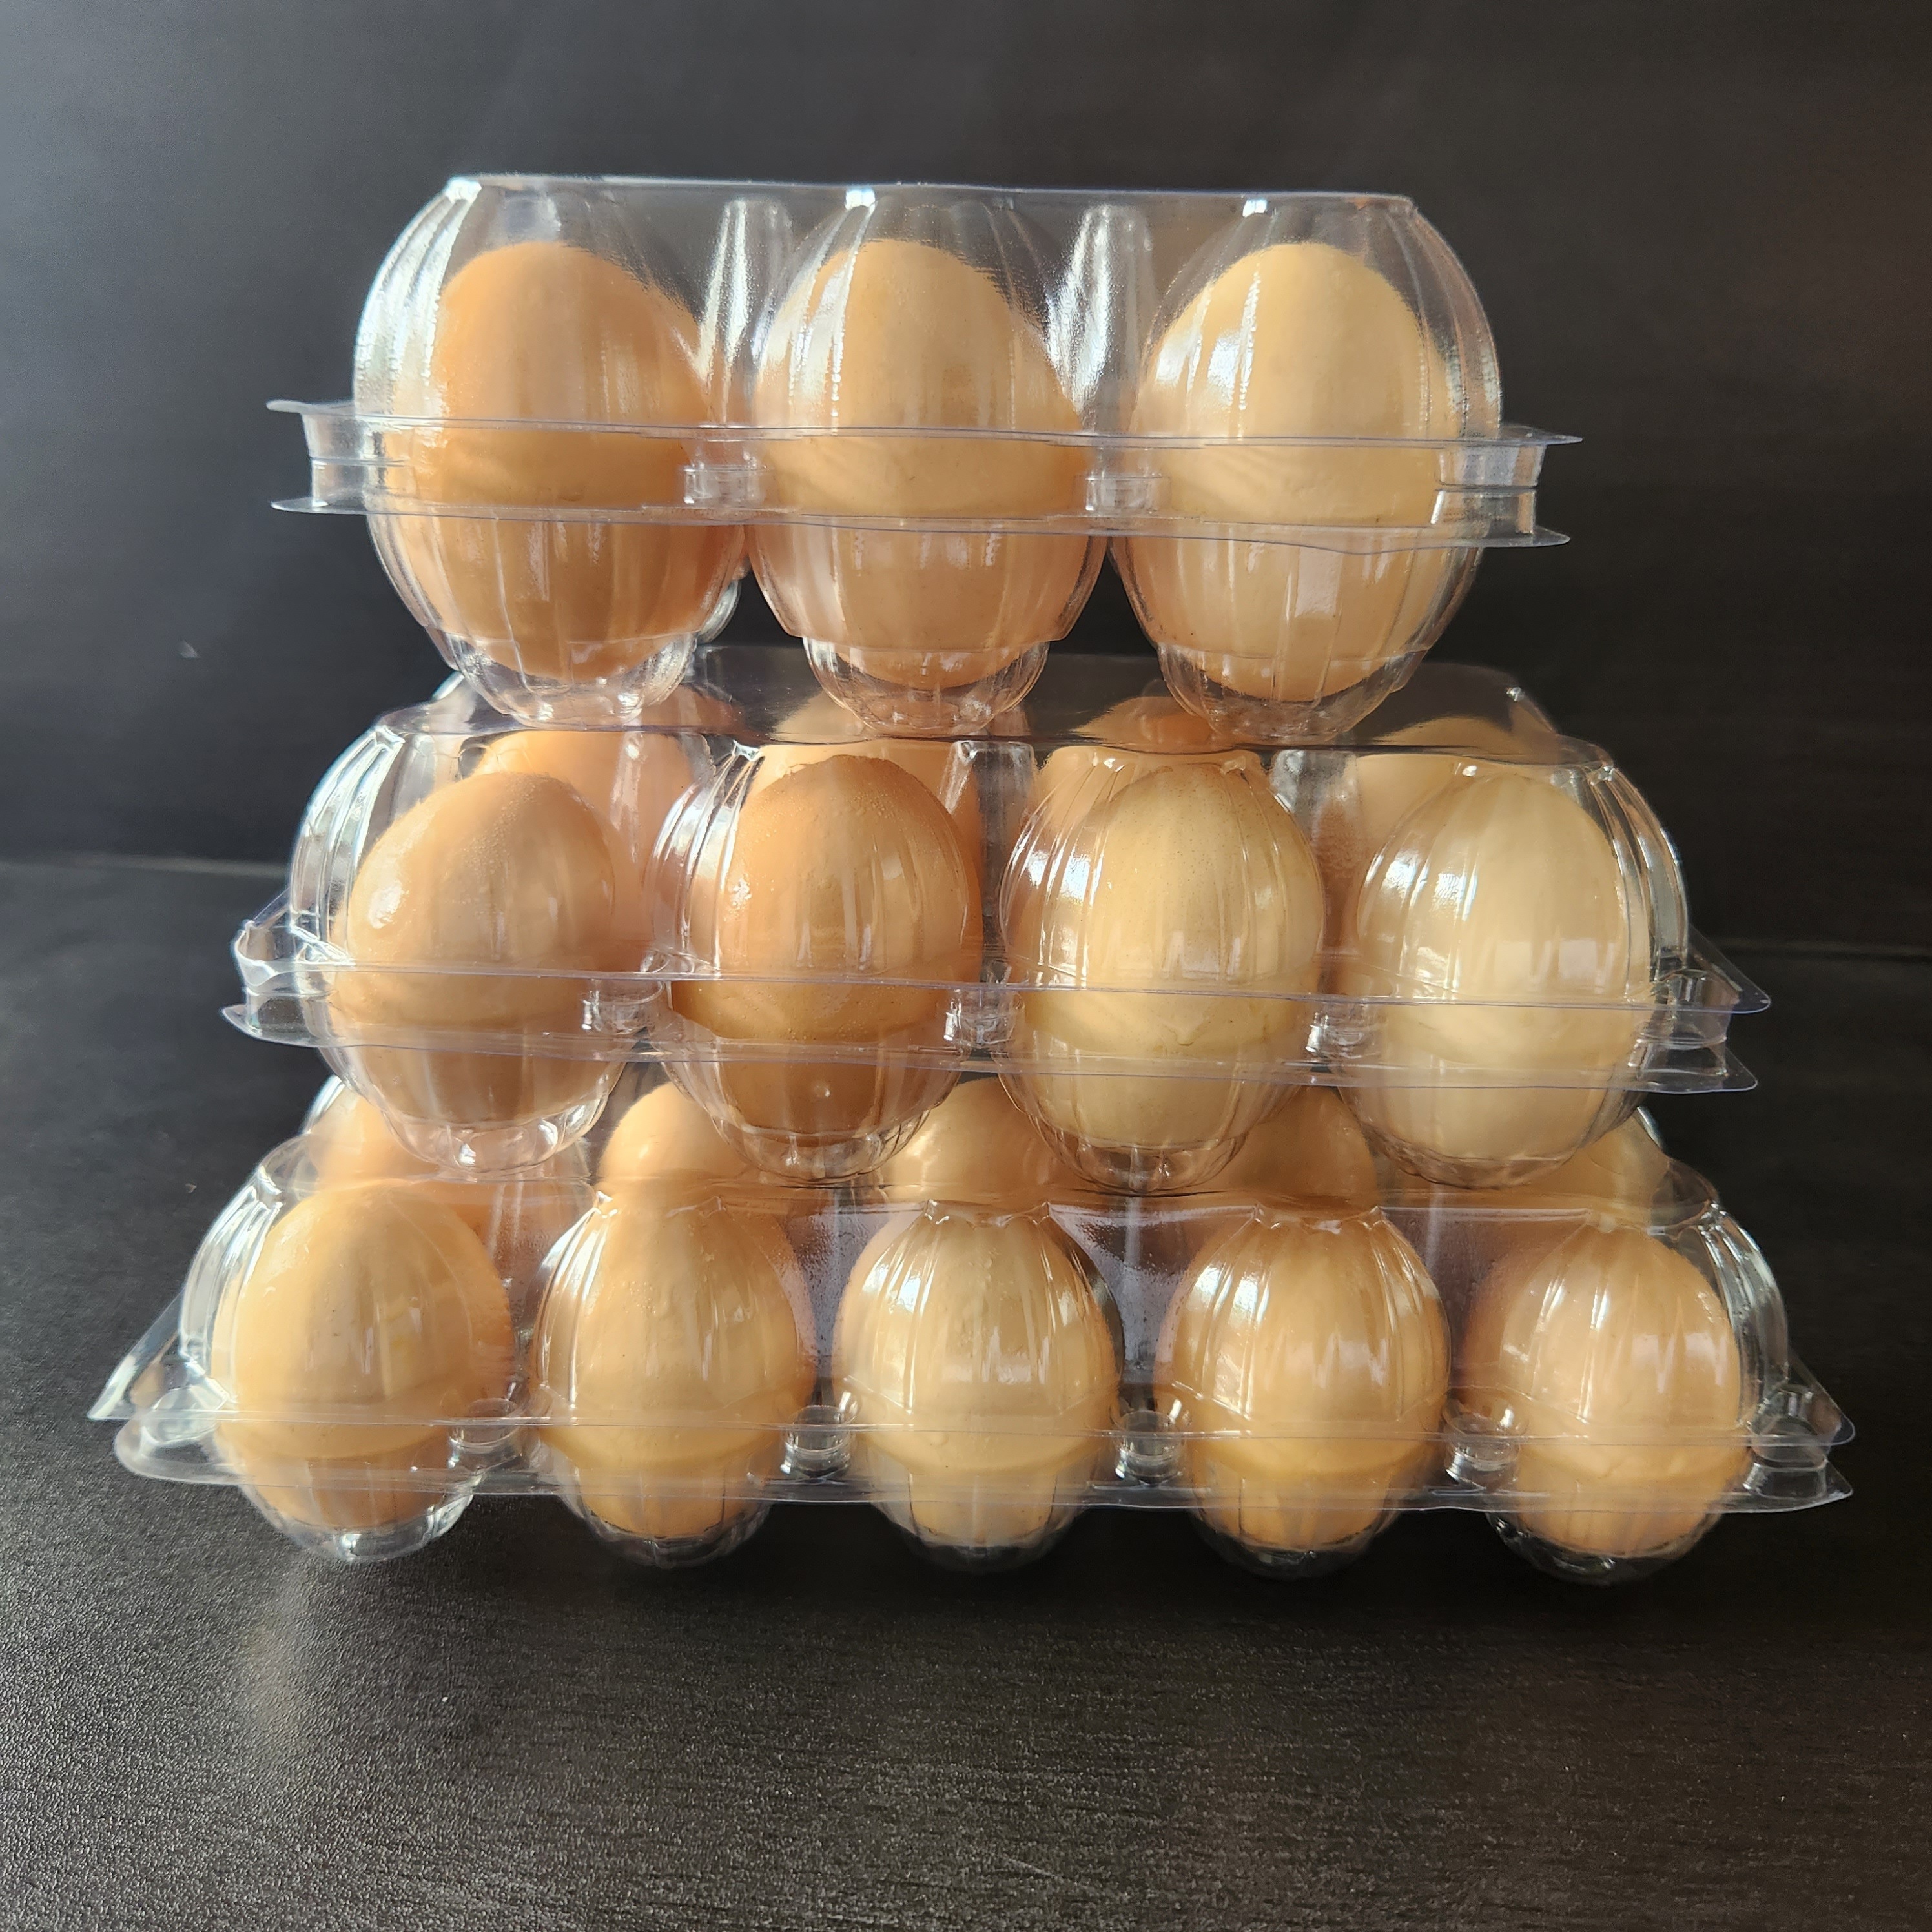 60 Pack Plastic Egg Cartons Cheap Bulk One Dozen Clear Empty Egg